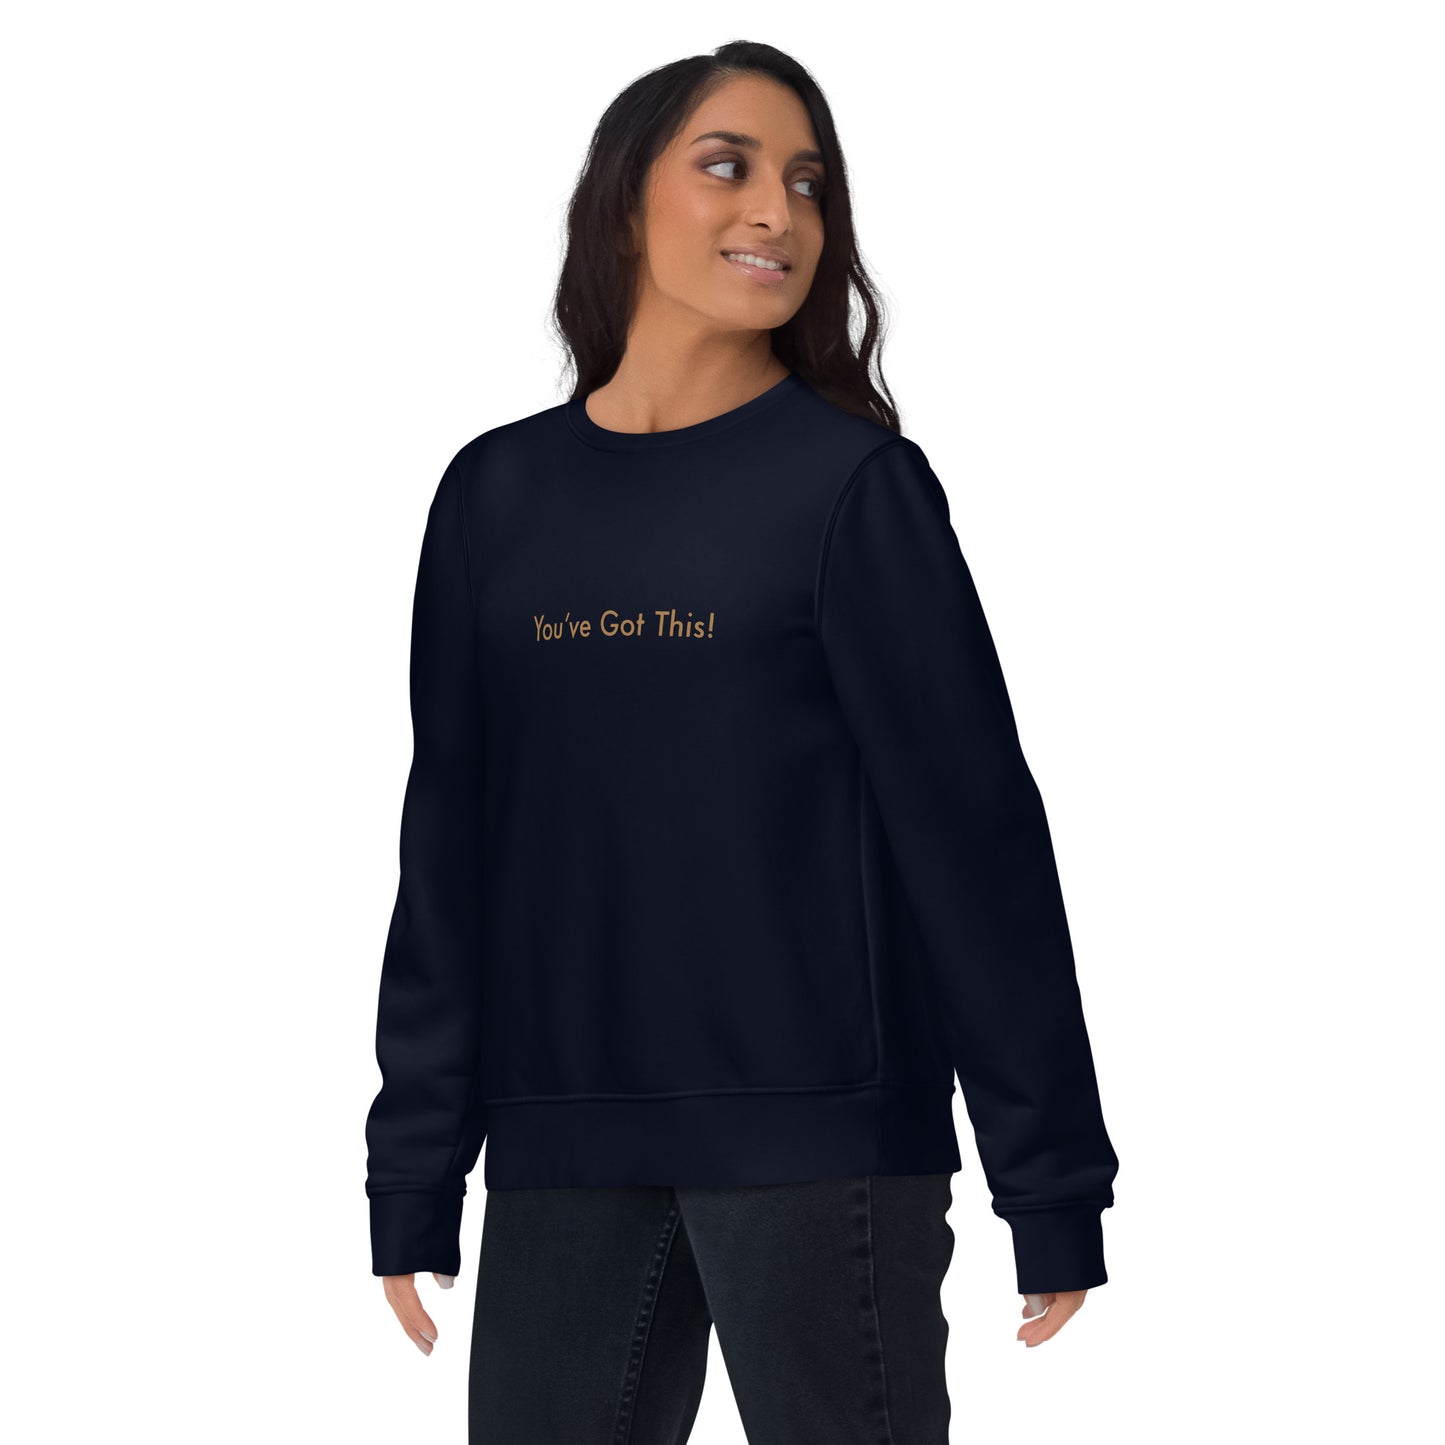 You've Got This! Women's Oversized Organic Cotton Sweatshirt